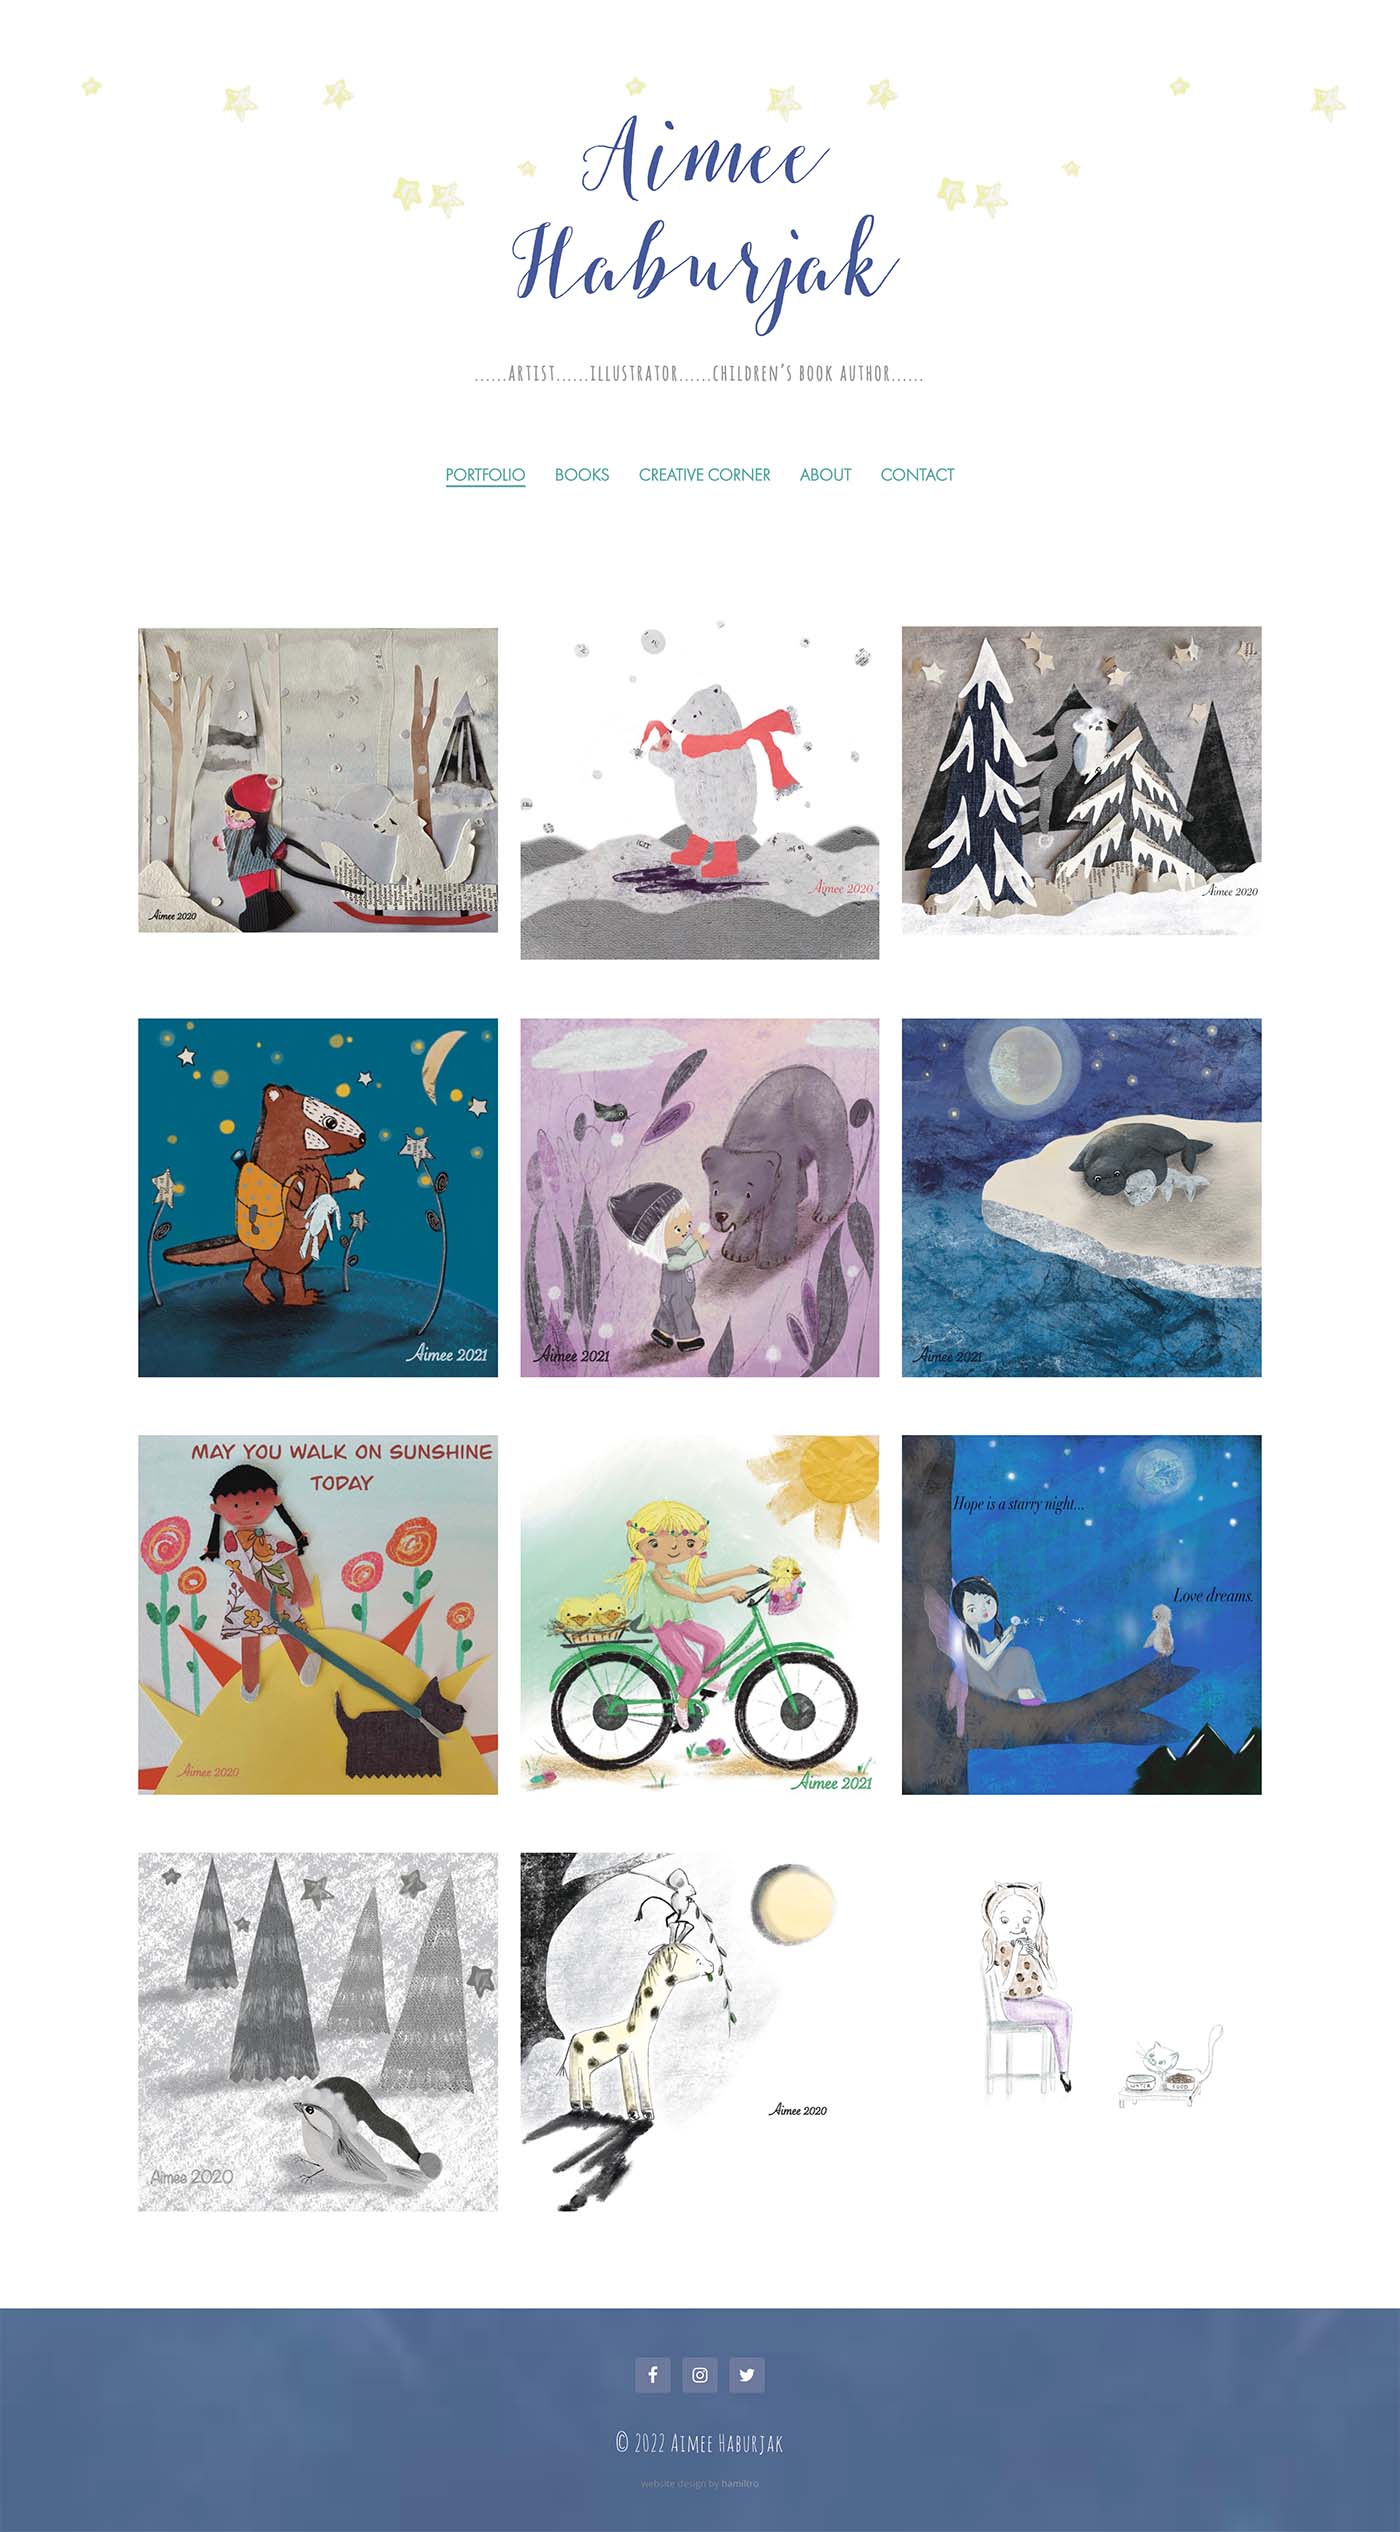 website design for a children's book illustrator - Aimee Haburjak